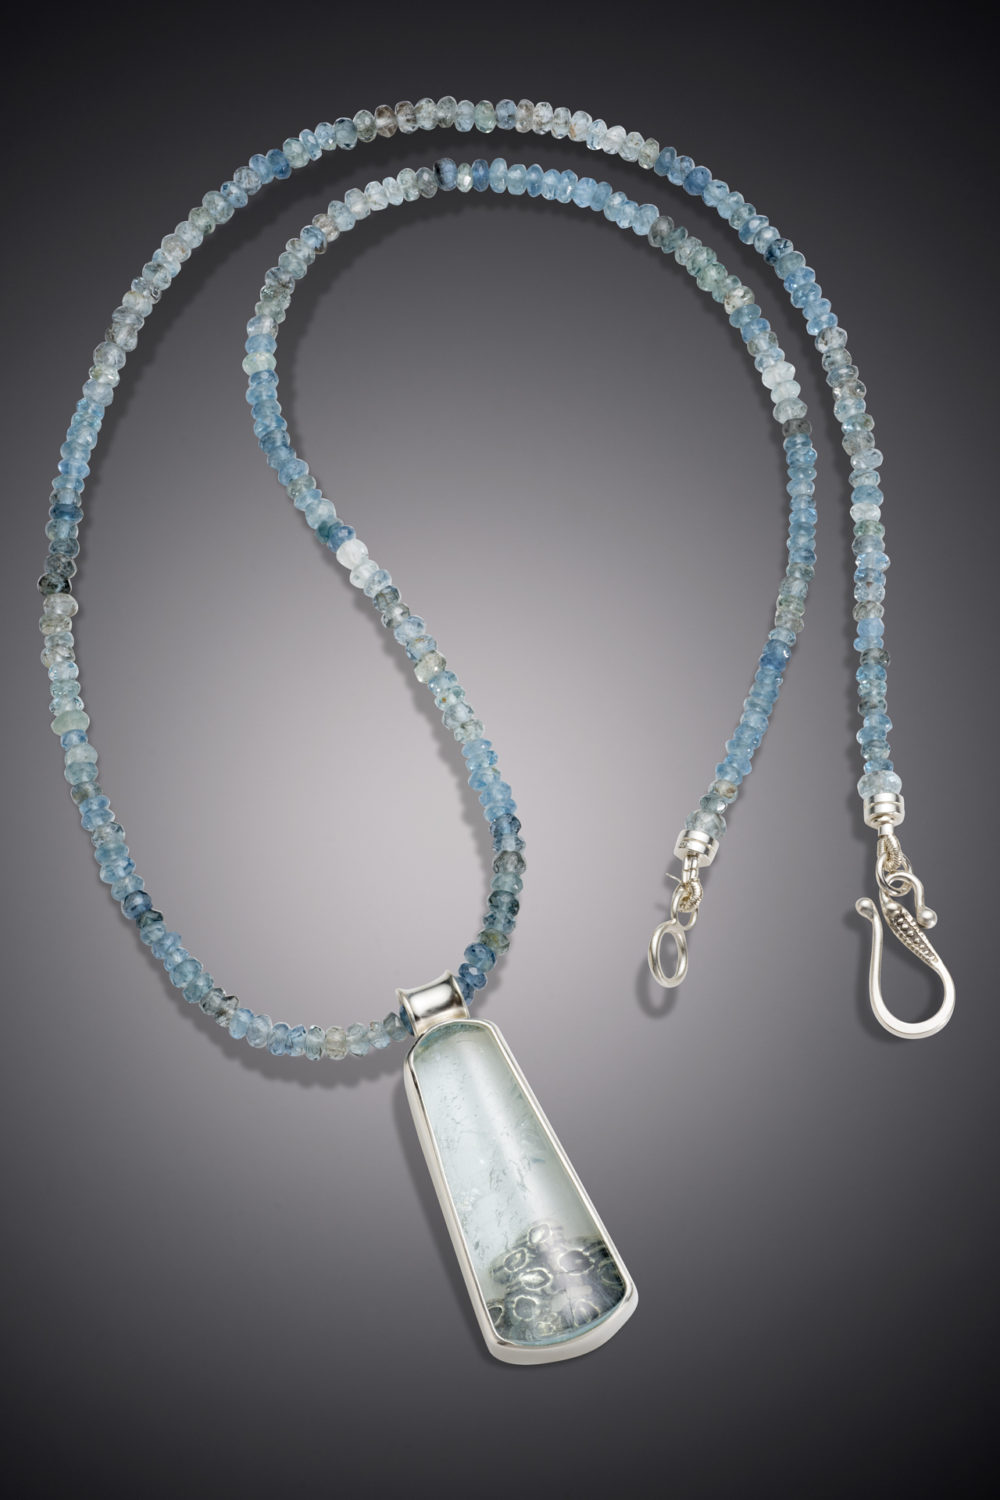 NISA Jewelry Beneath the Surface Aquamarine Necklace on gray